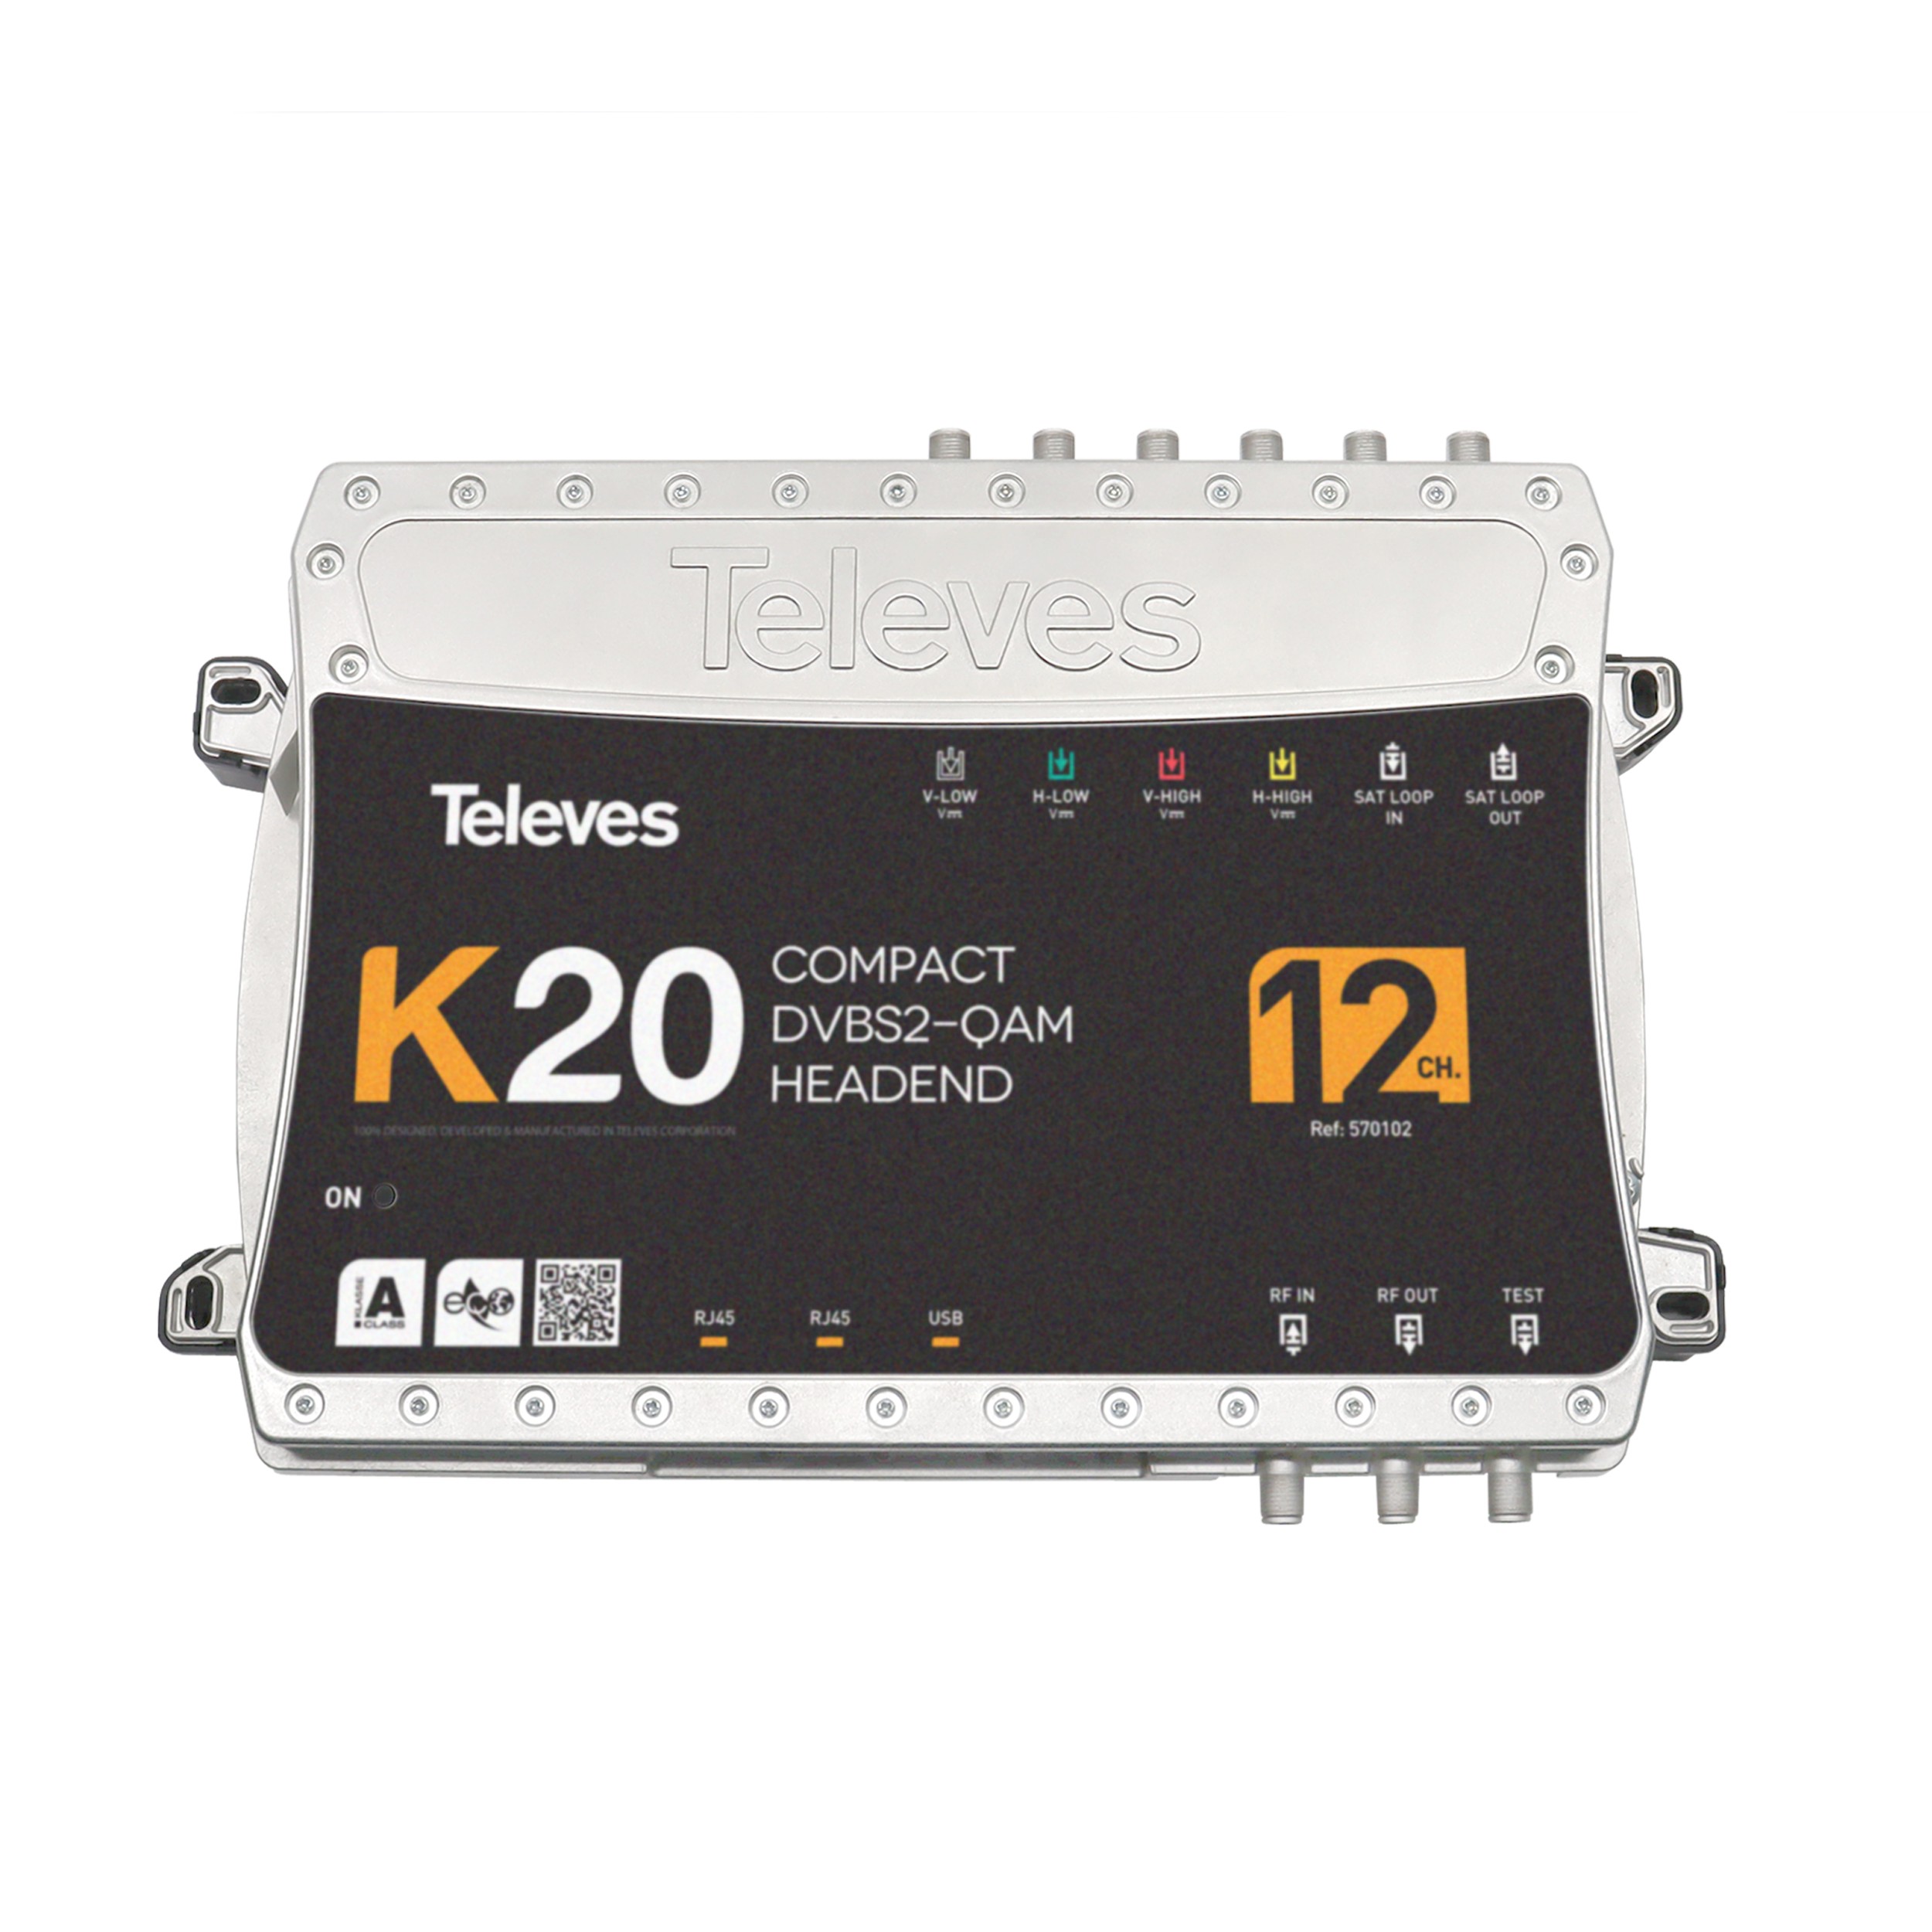 K20 - Kompaktkopfstelle 12 Transponder DVB-S2 in QAM